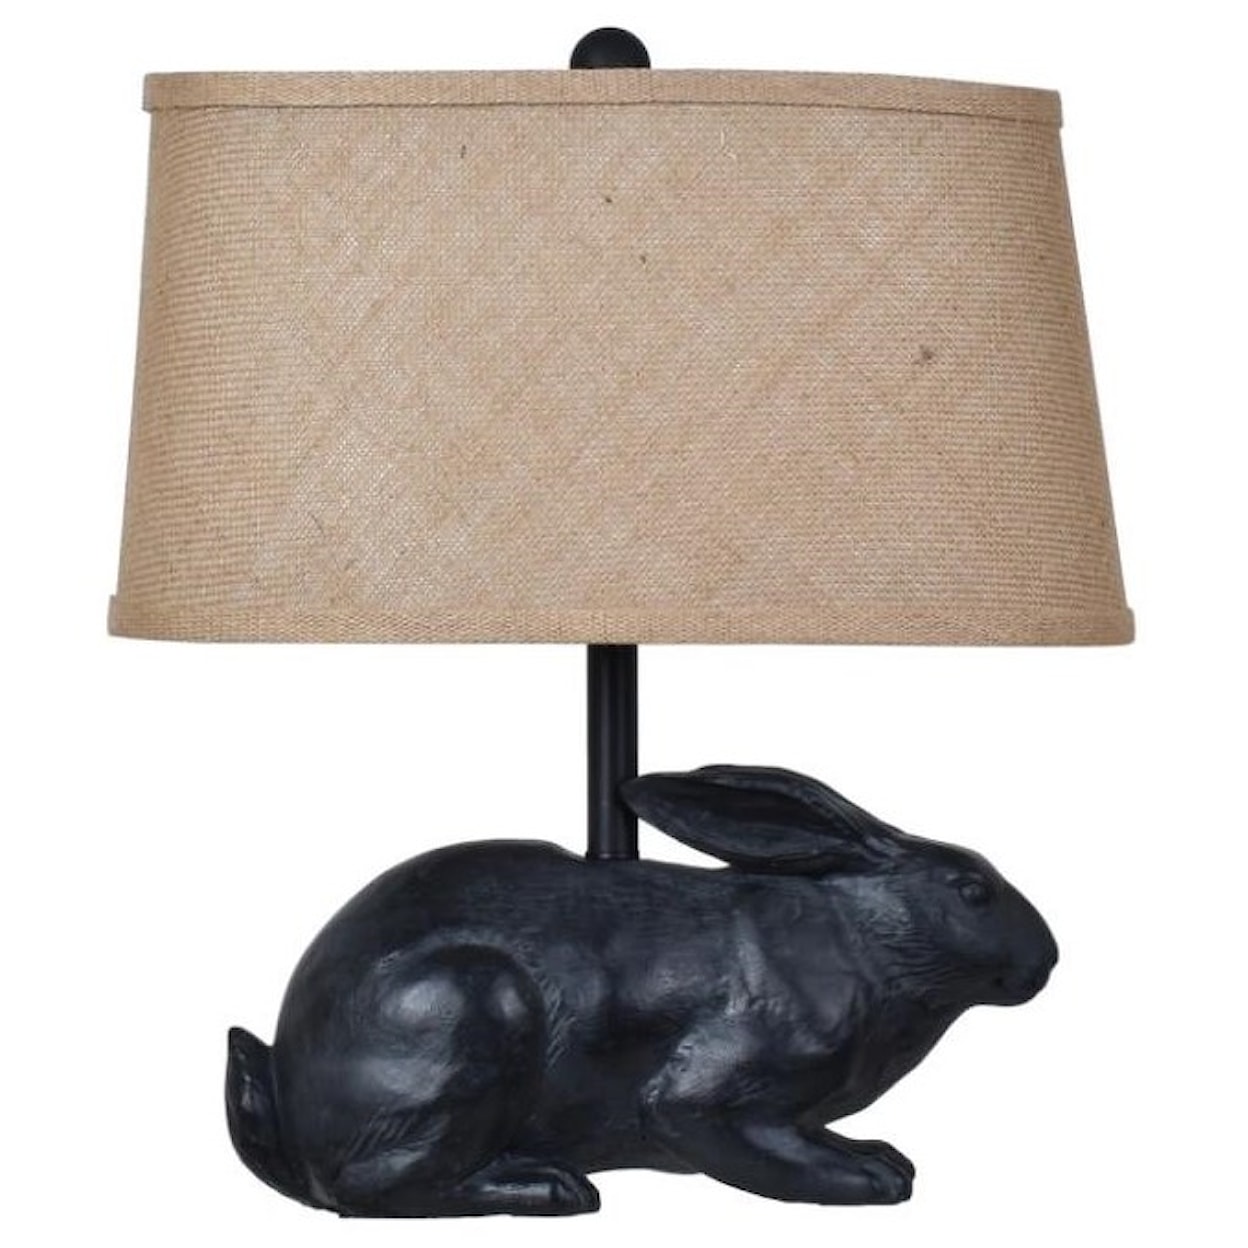 Crestview Collection Lighting Rabbit Table Lamp